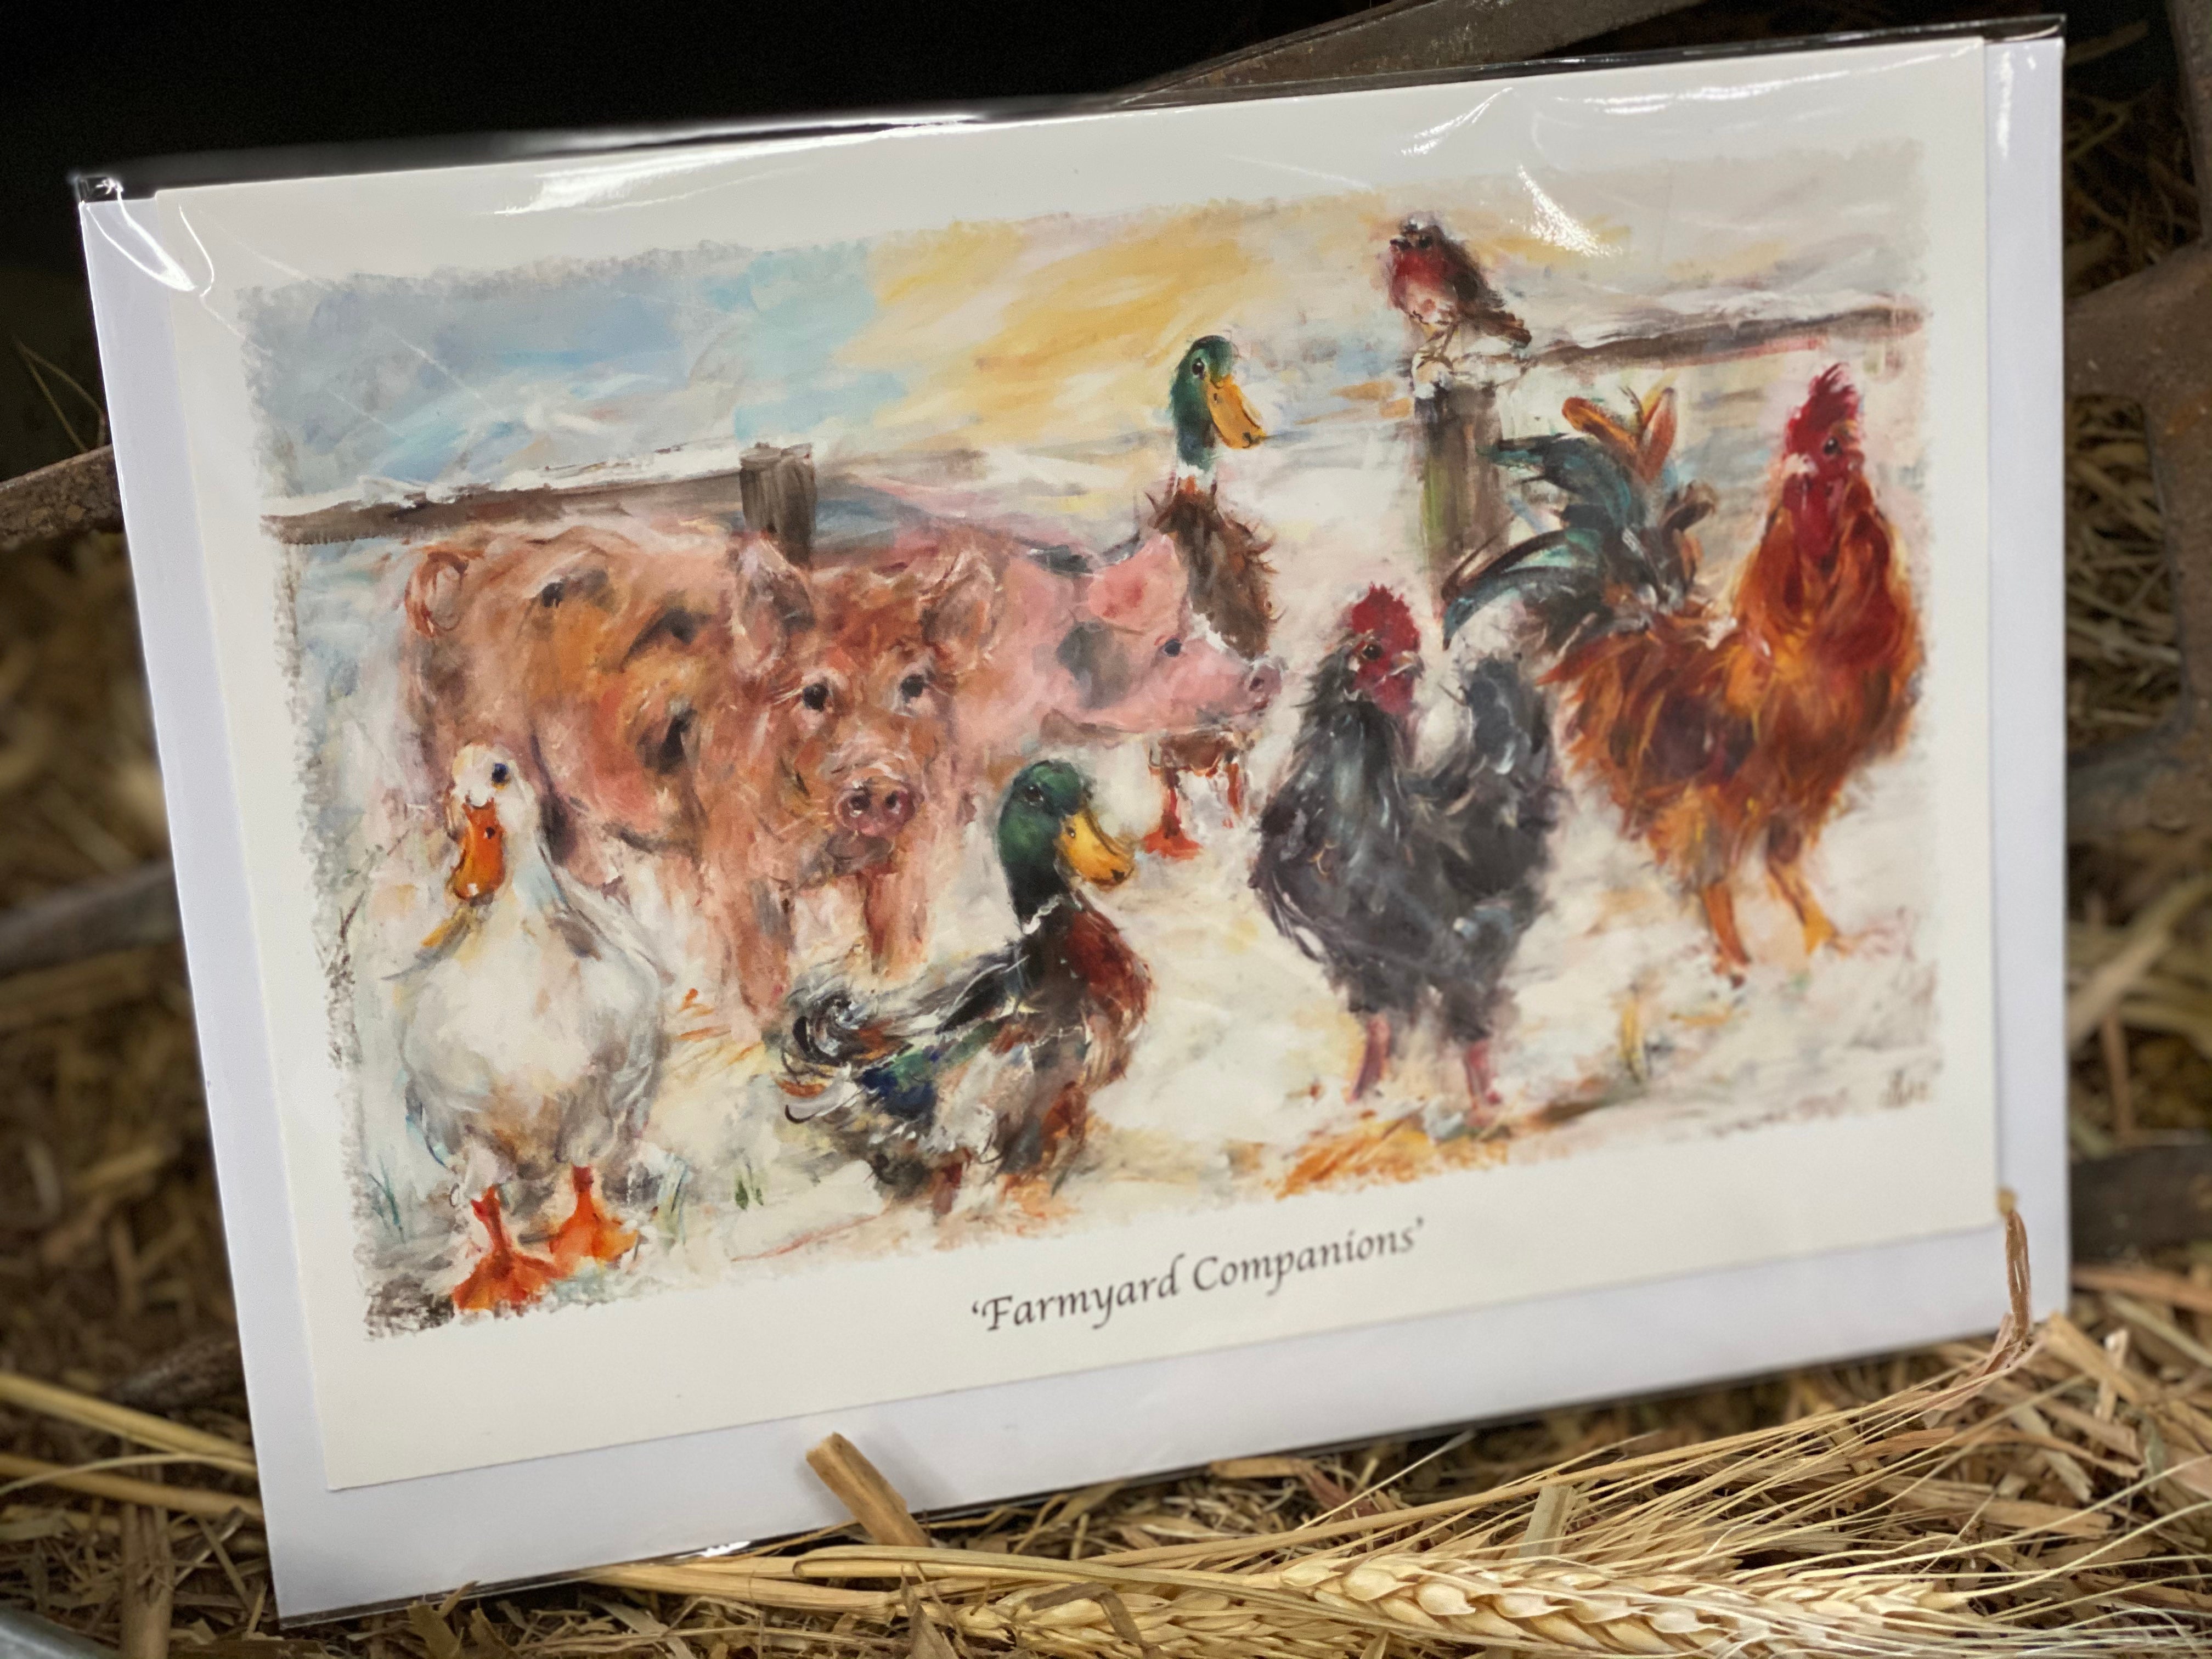 ARTZ CARD “Farmyard Companions”